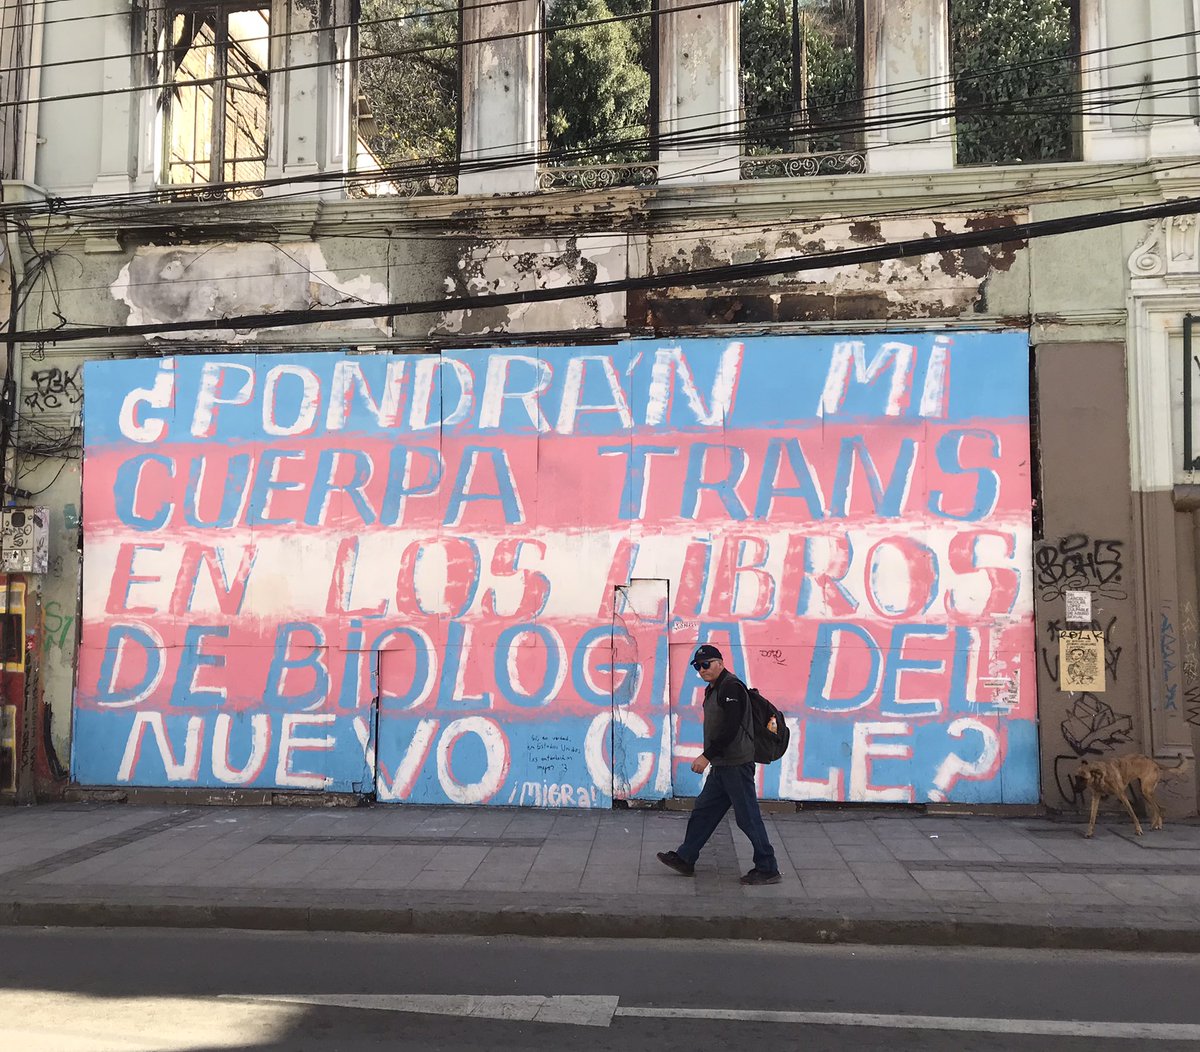 [•] calles de valparaíso _
1.5.23
.
#valparaiso #muralismo #cityscape #trans #streetart #chile #nobinario 
los muros hablan #fotocallejera